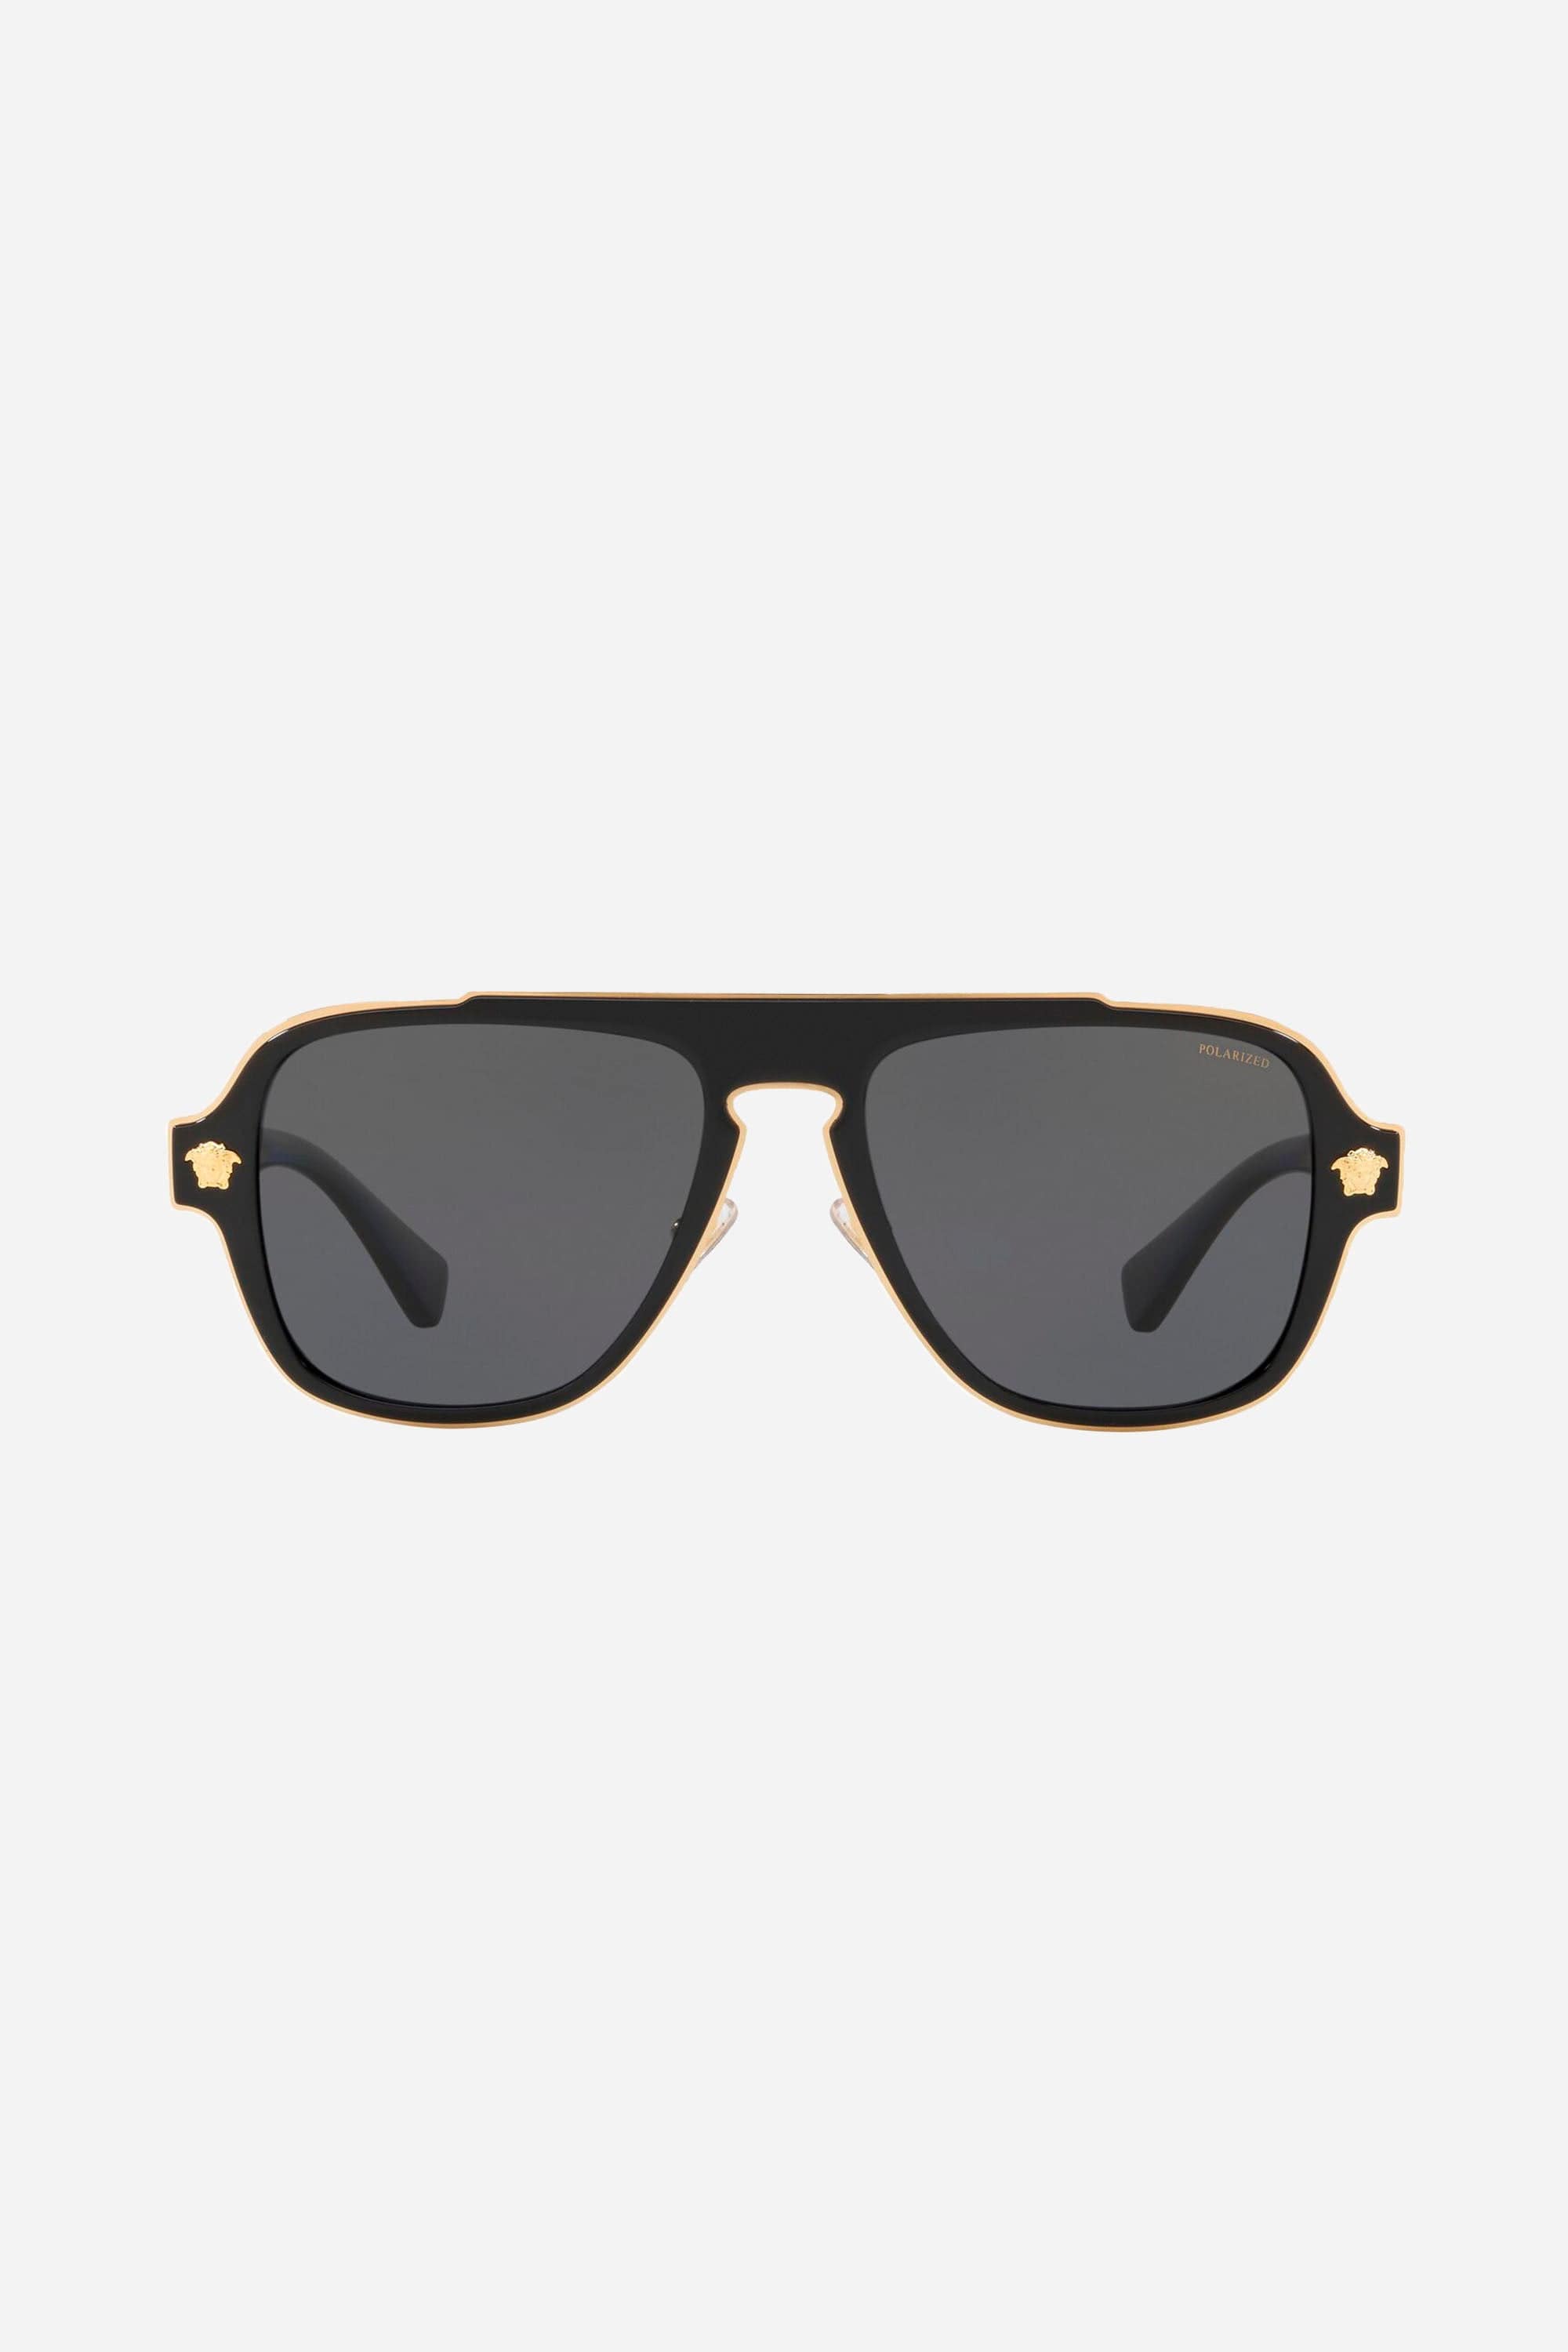 versace-caravan-sunglasses-with-gold-details-448603.jpg?v=1661489444